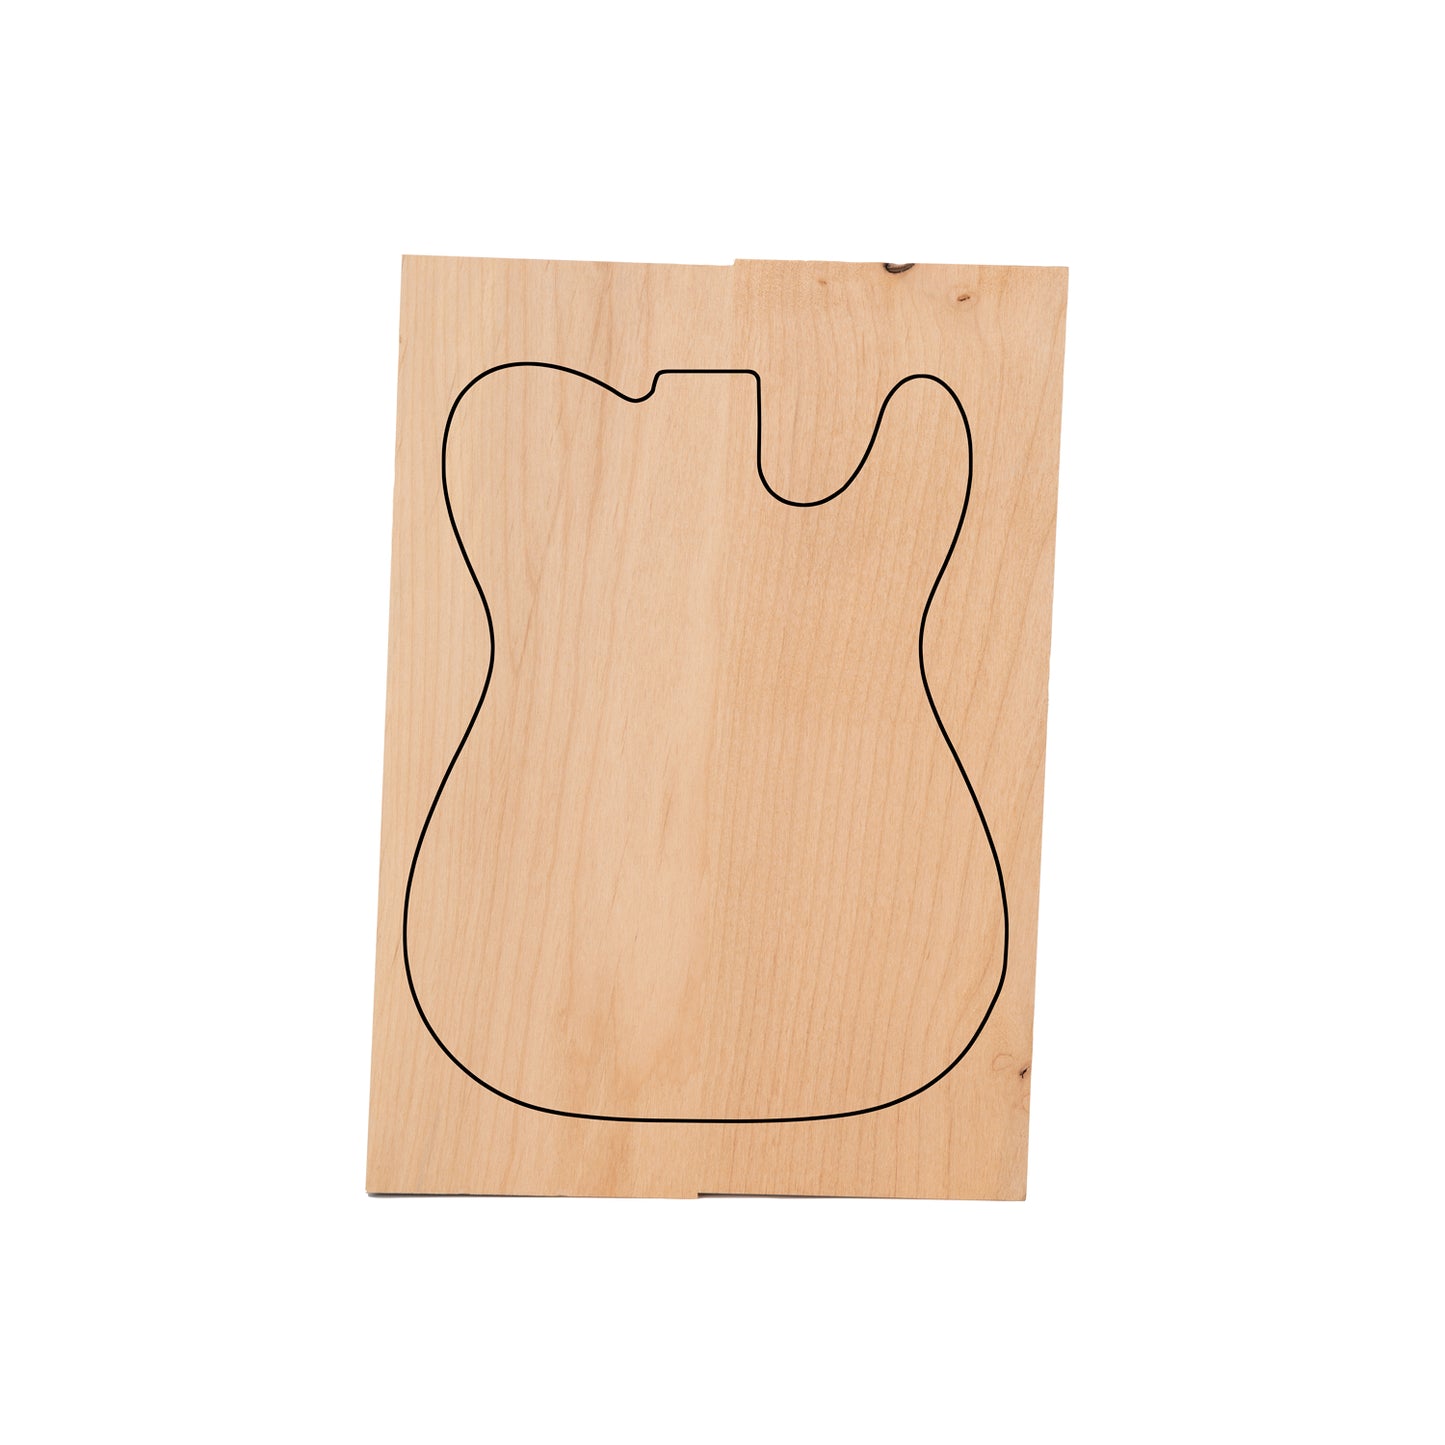 AE Guitars® Premium Alder Guitar Body Blank 2 Piece Glued Solid